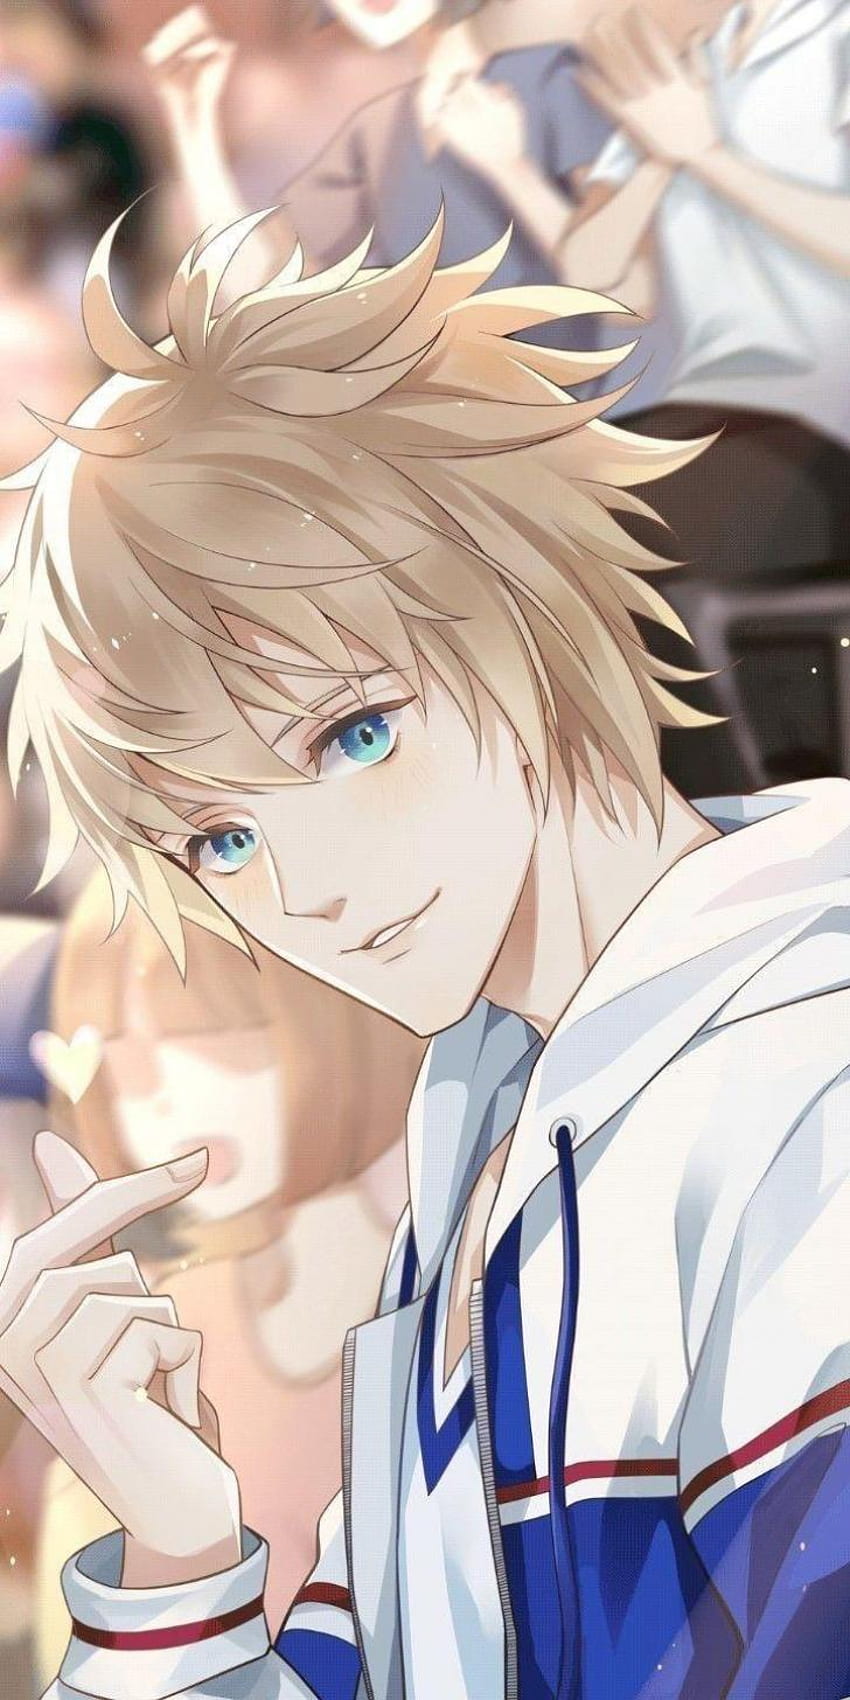 Premium Vector  Anime boy avatar